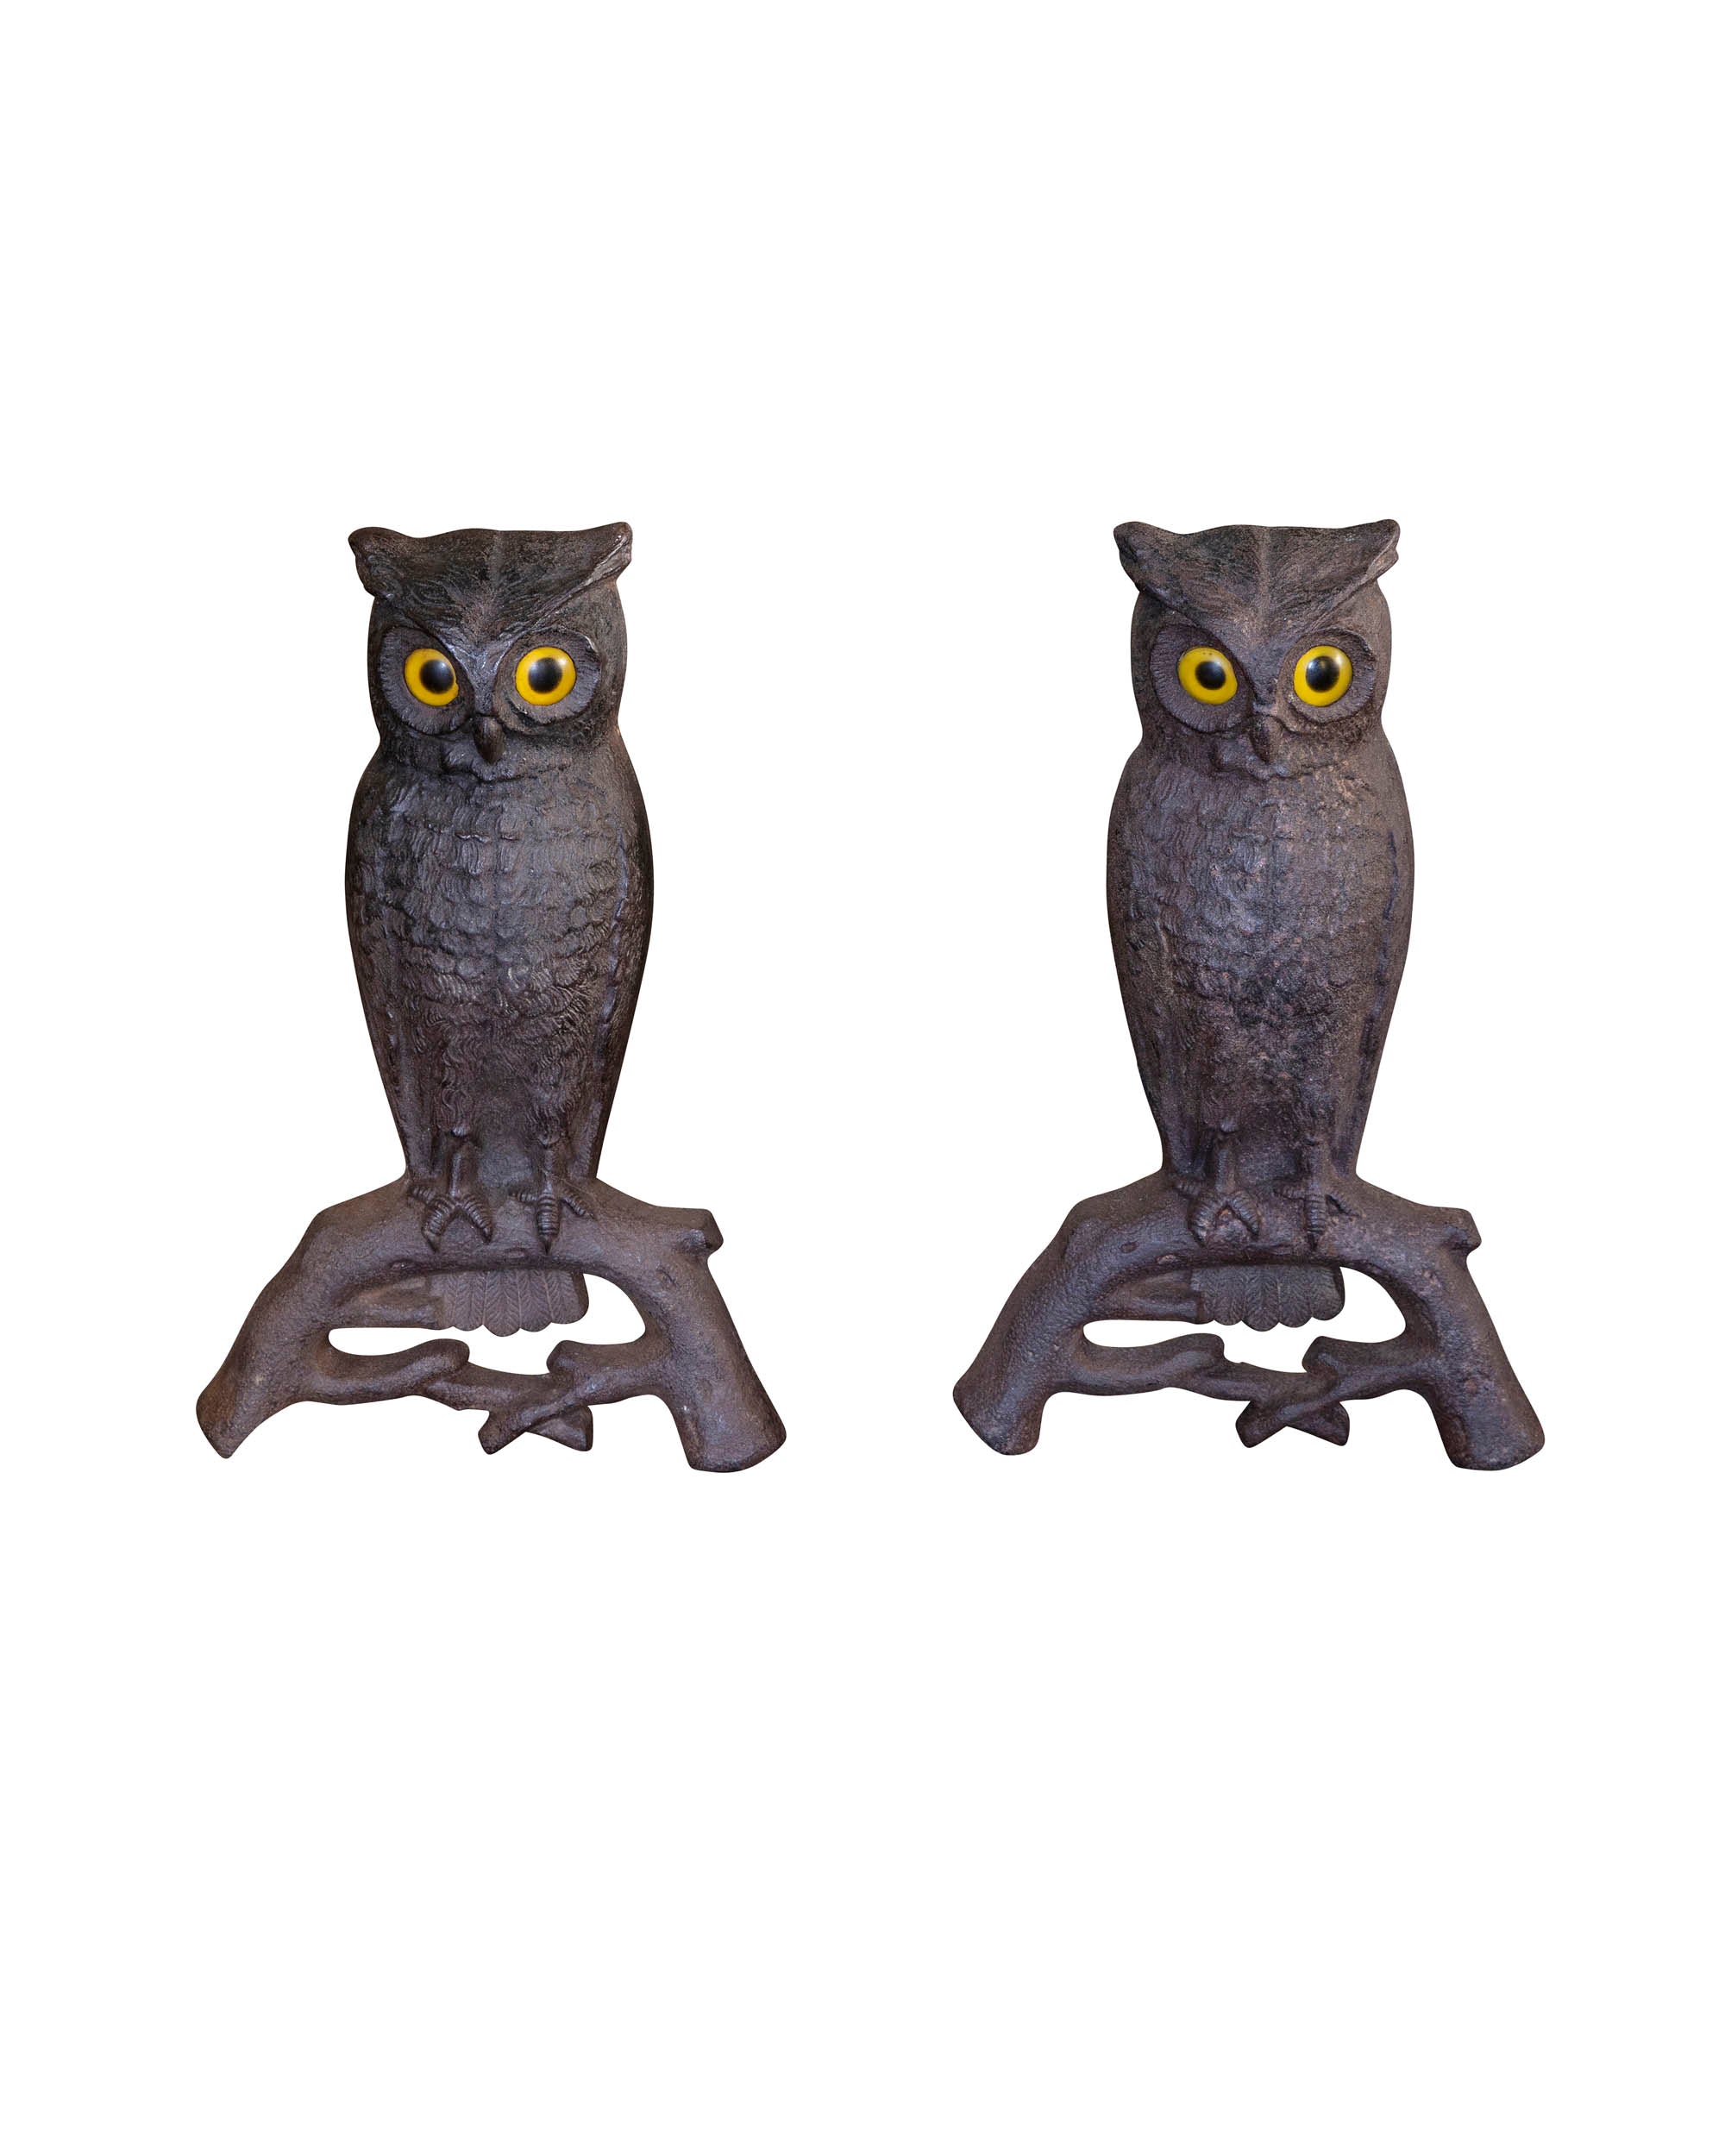 Cast iron chimney andirons shaped like owls. 1887